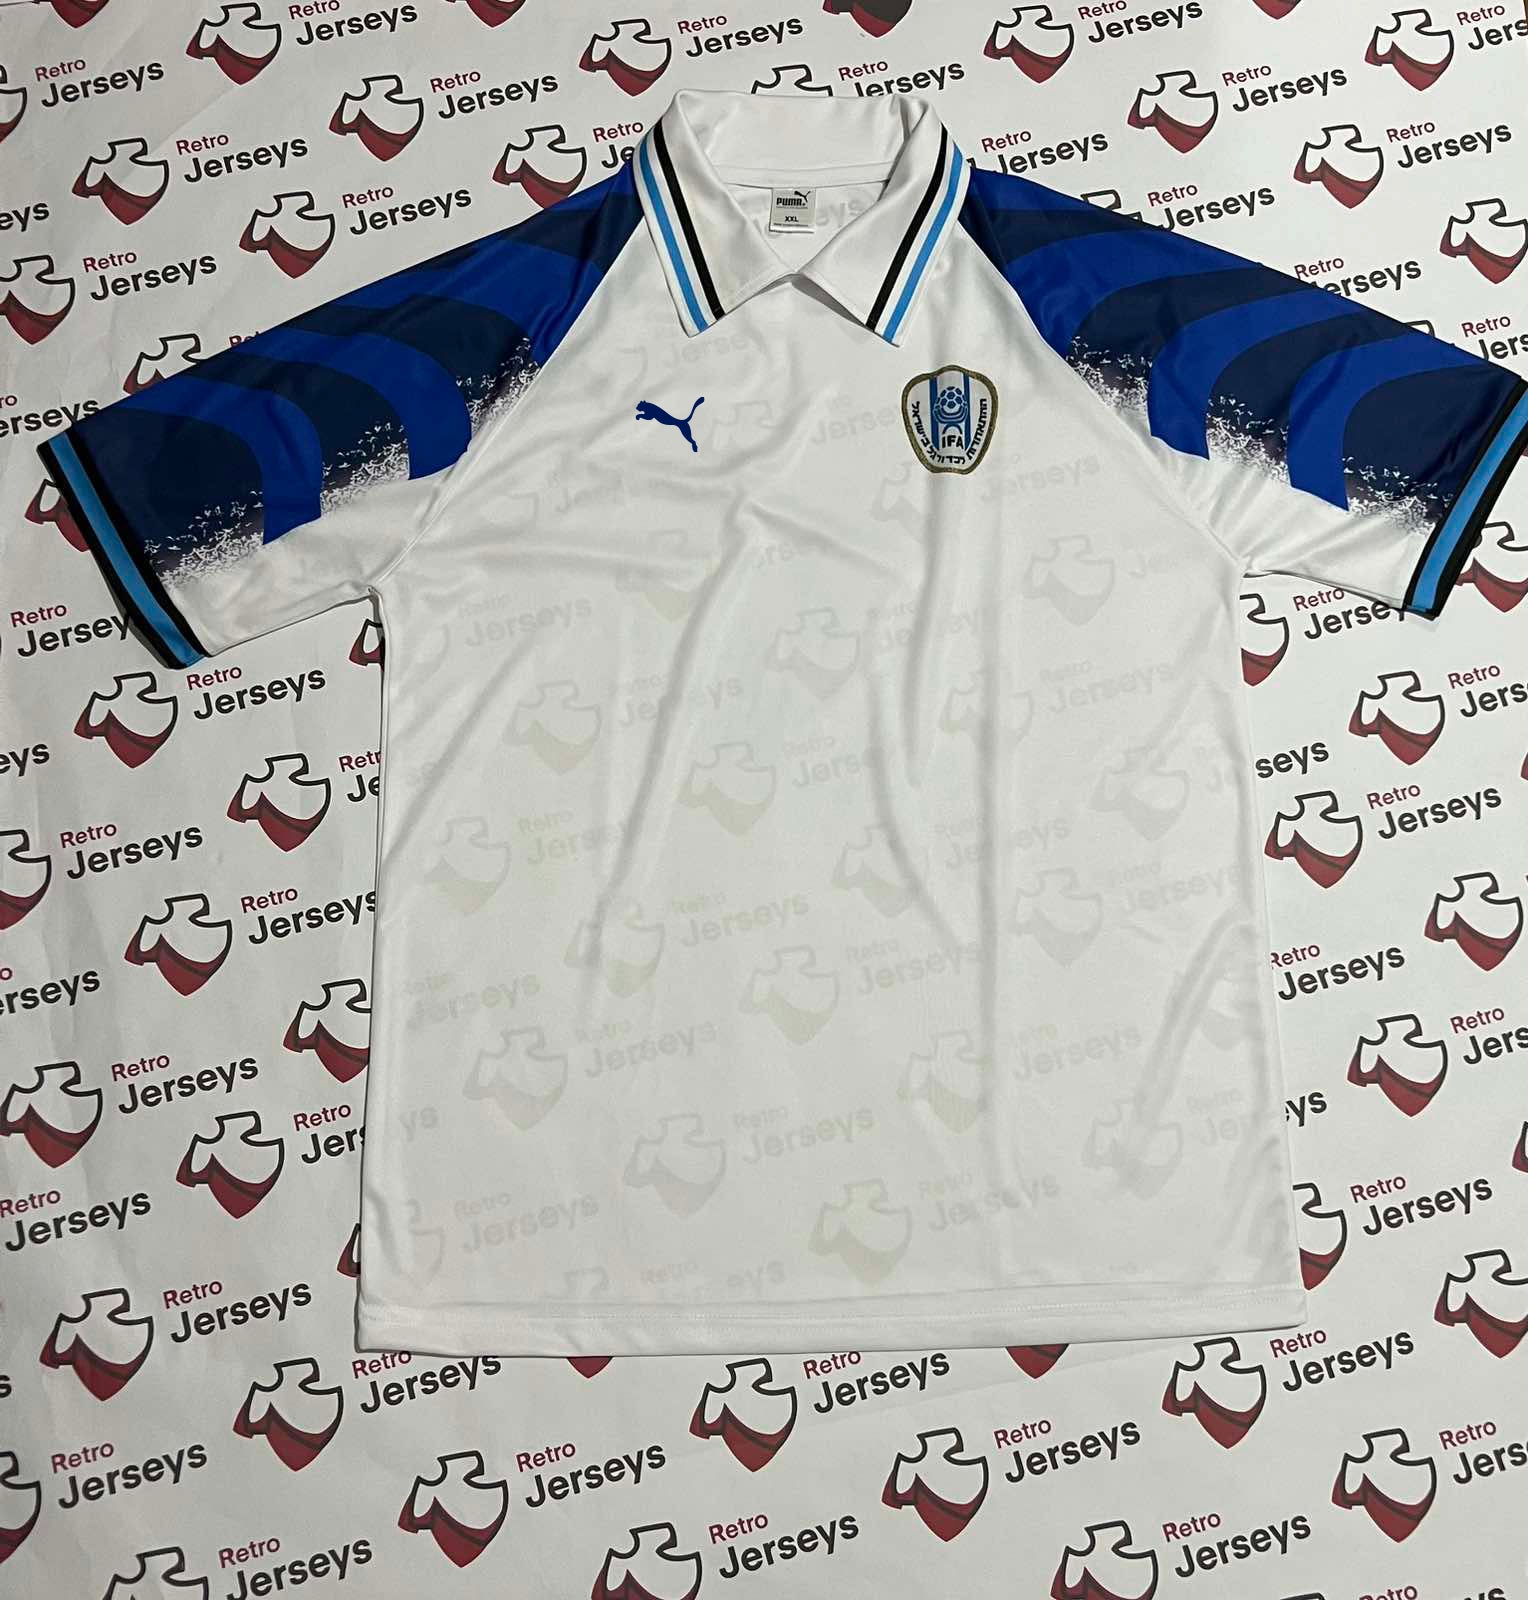 Israel National Shirt 1996 Away - Retro Jerseys, חולצה של ישראל - Retro Jerseys